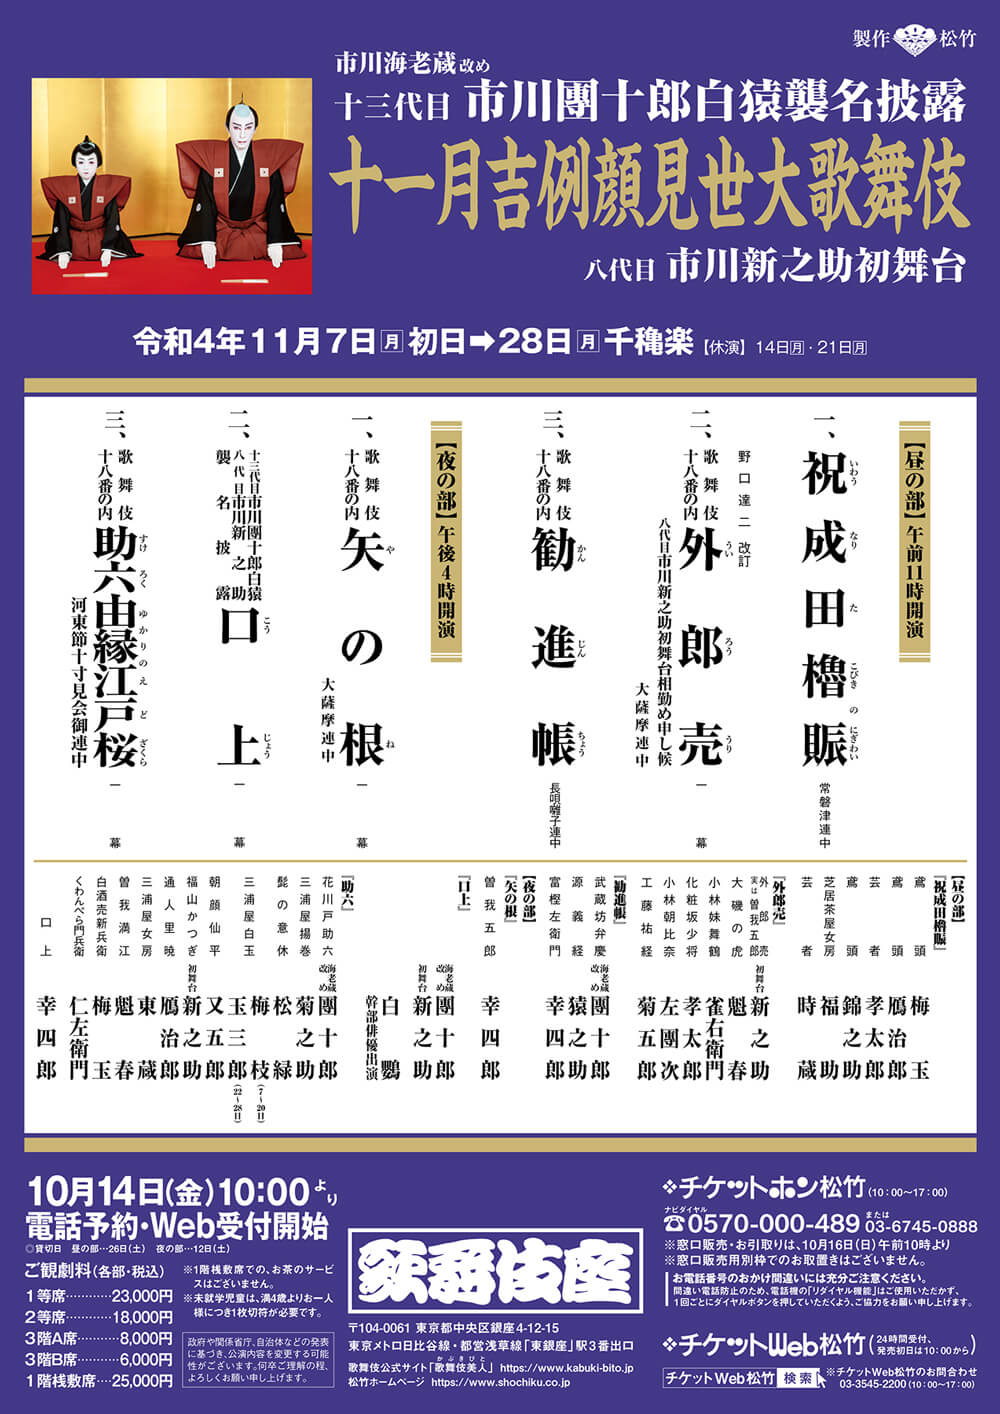 November Program at the Kabukiza Theatre